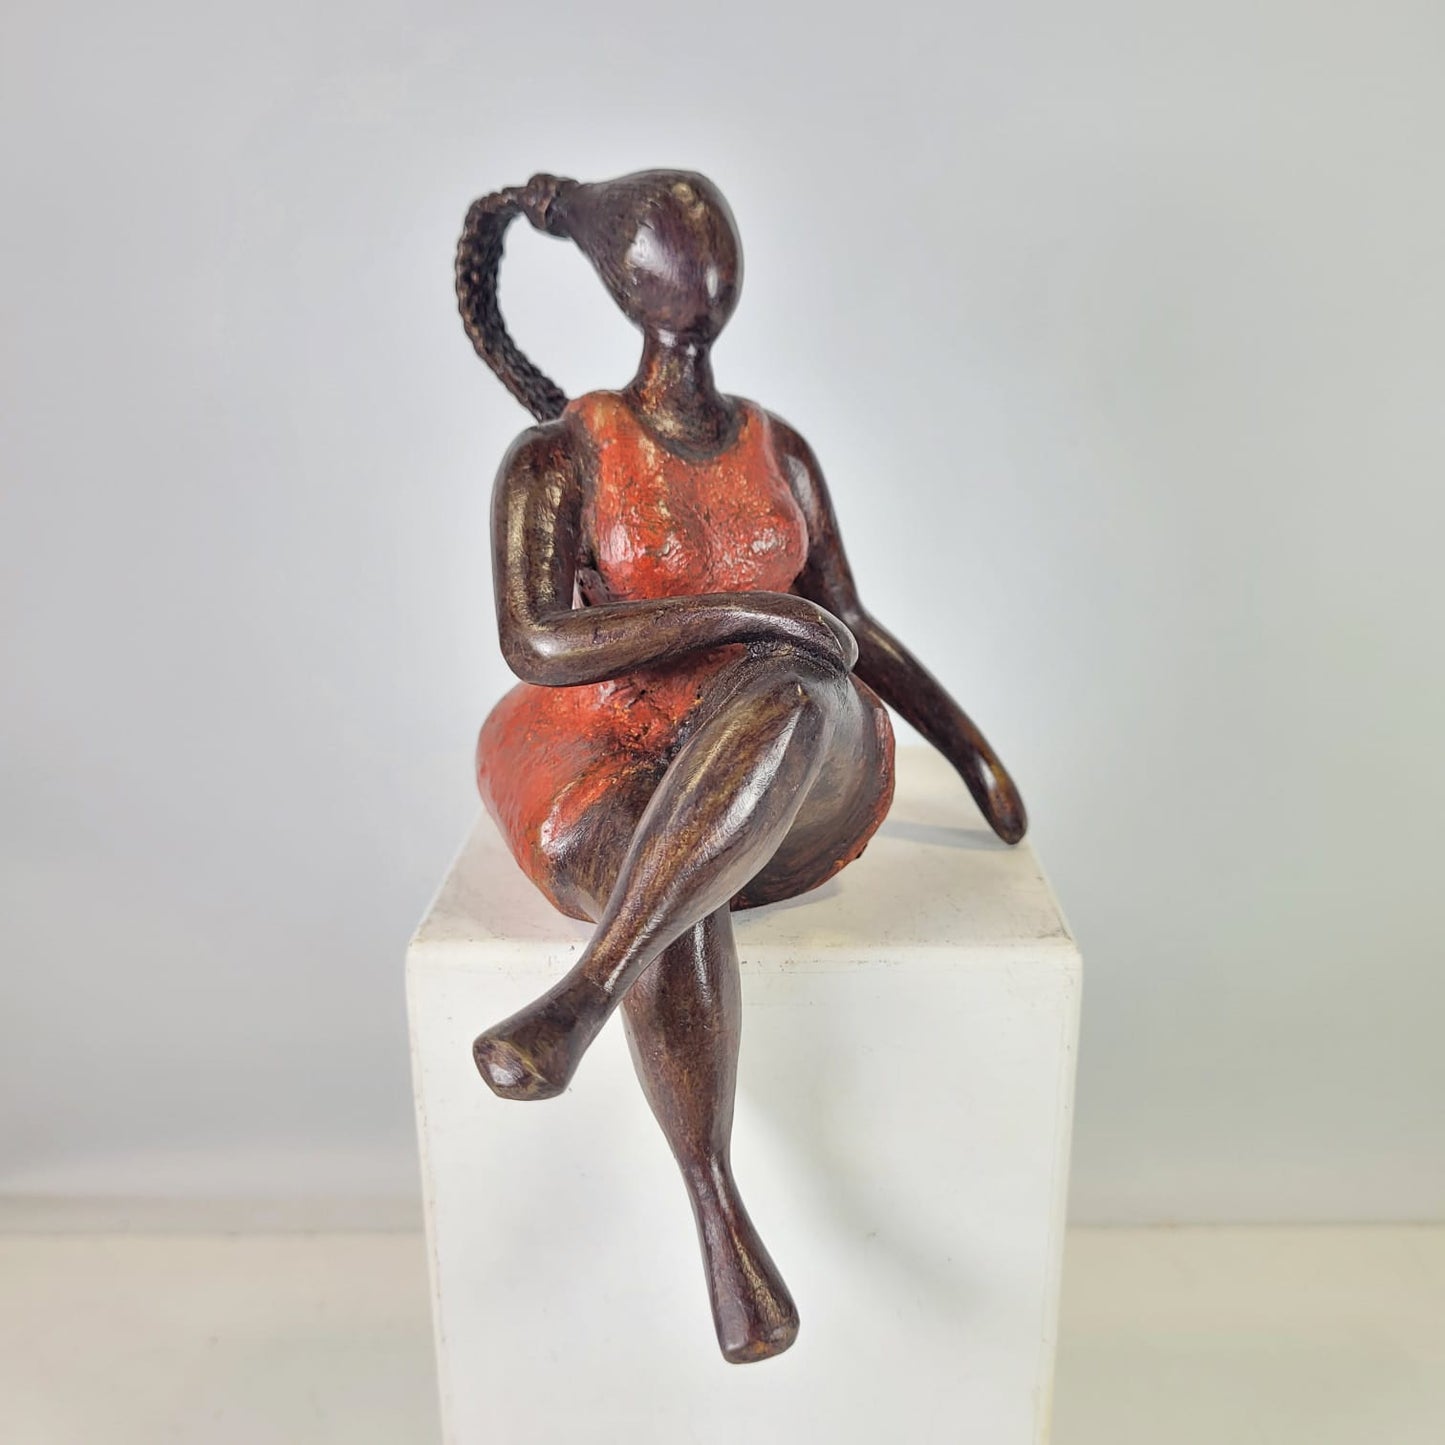 Bronze-Skulptur "Bobaraba Lola" by Alain Soré | 20cm 800g | verschiedene Farben